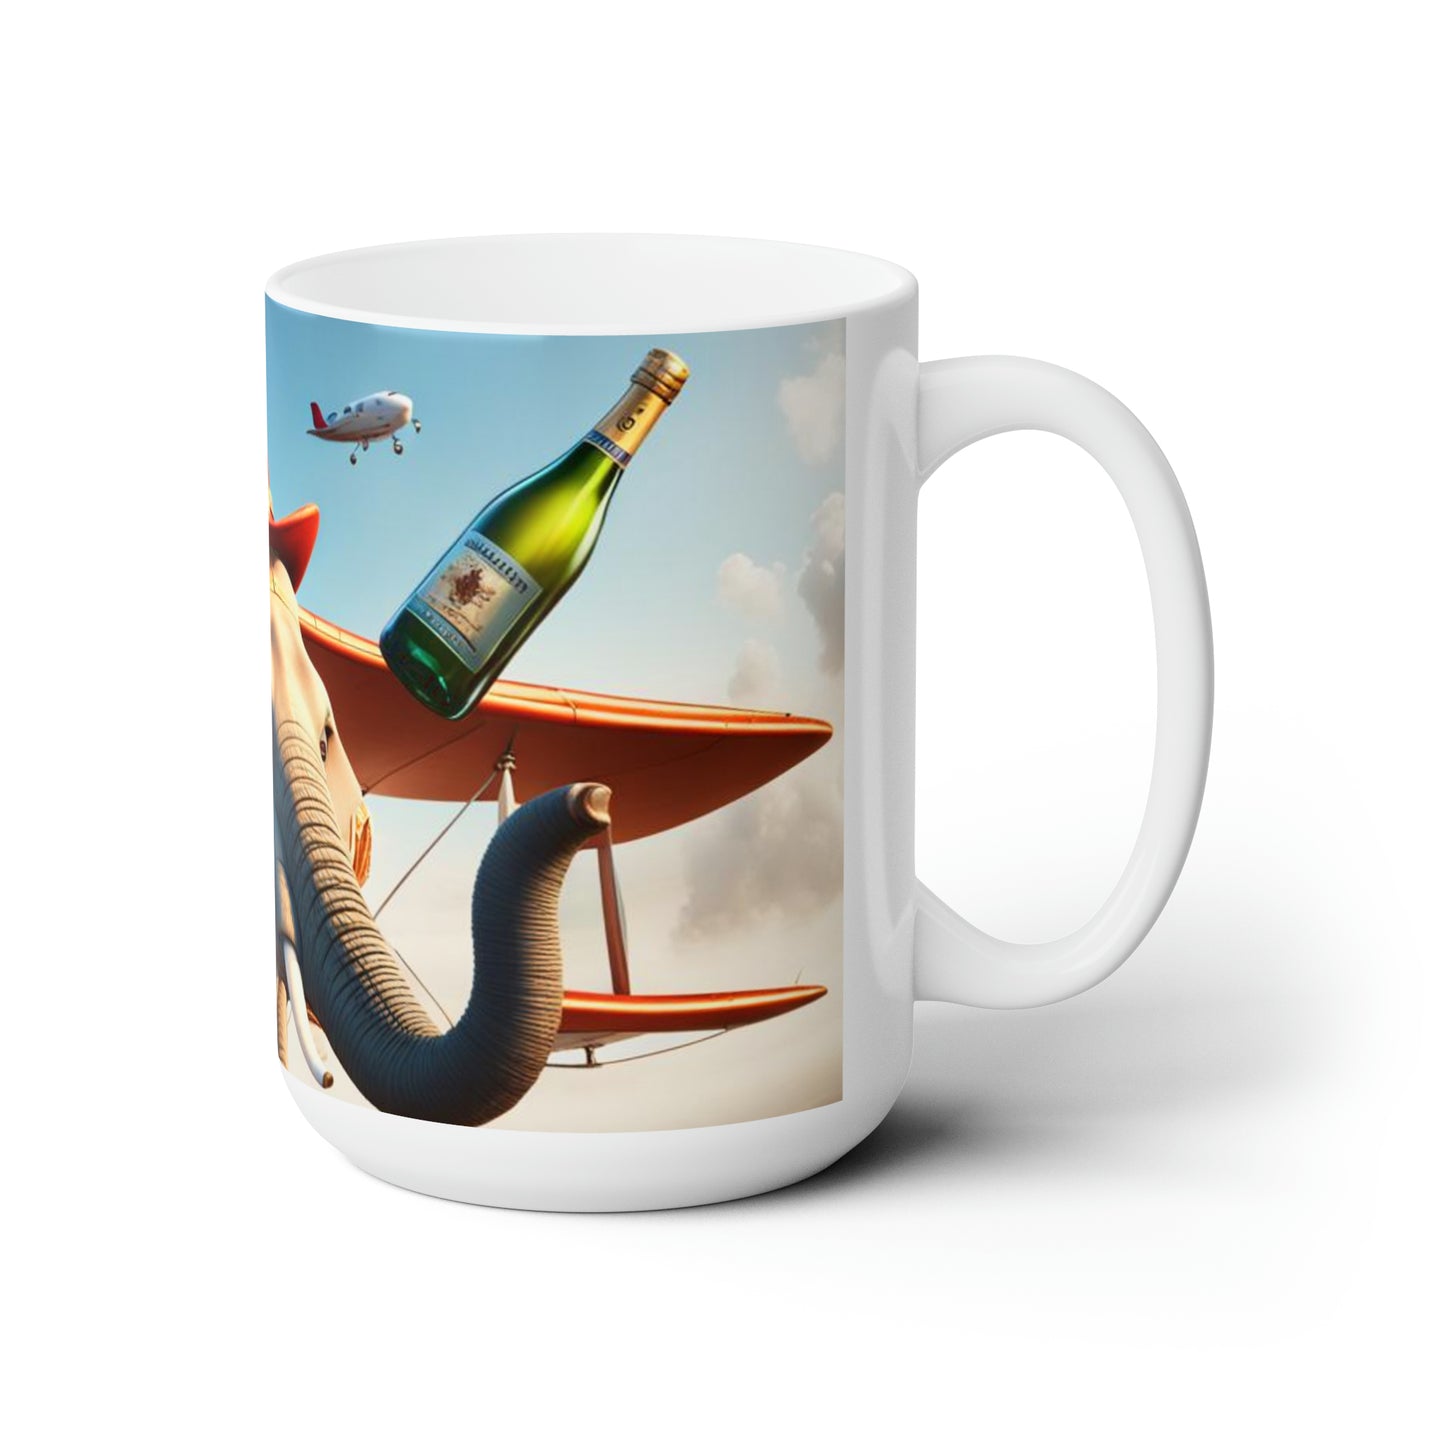 Flying Havana Elephant themed Ceramic Mug 15oz